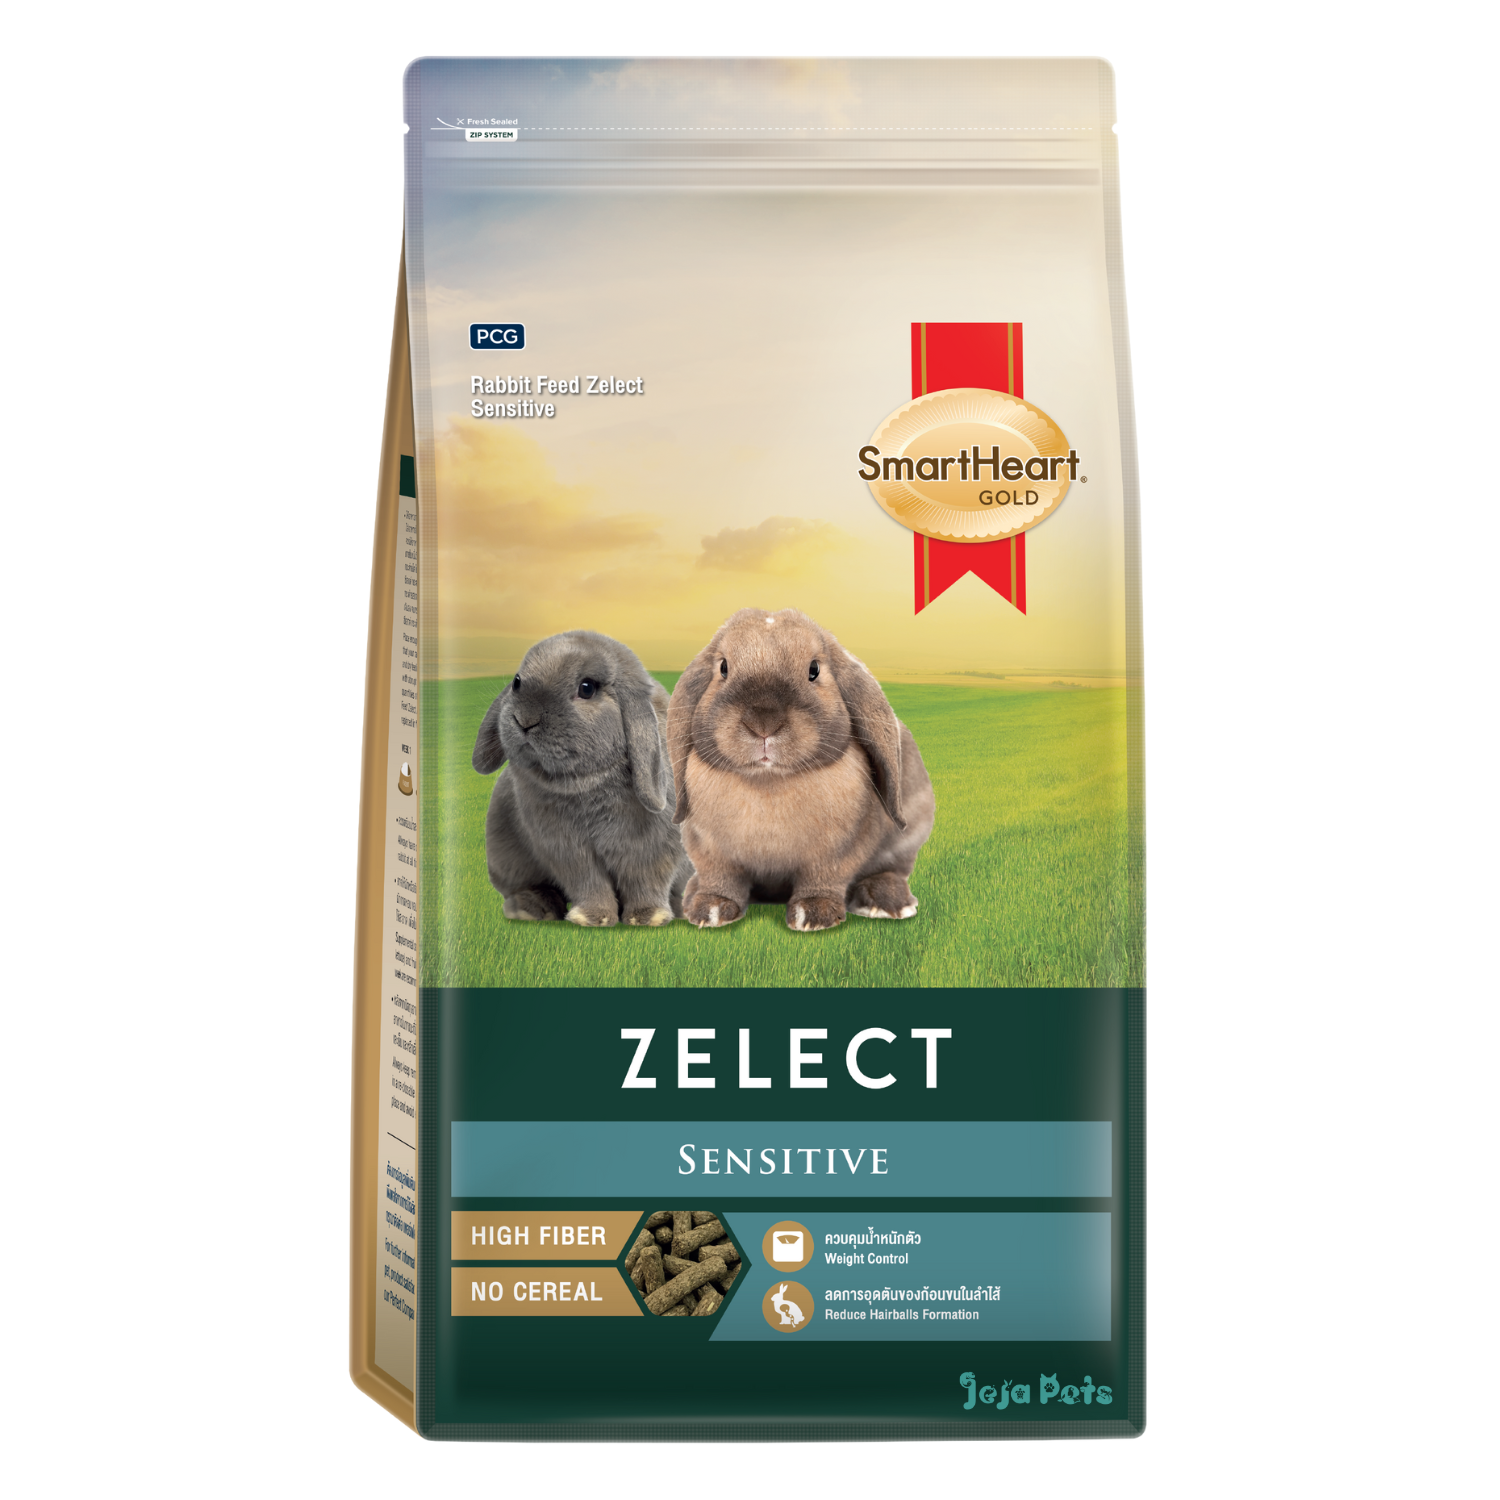 SmartHeart Gold Rabbit Food (Zelect Sensitive) - 500g